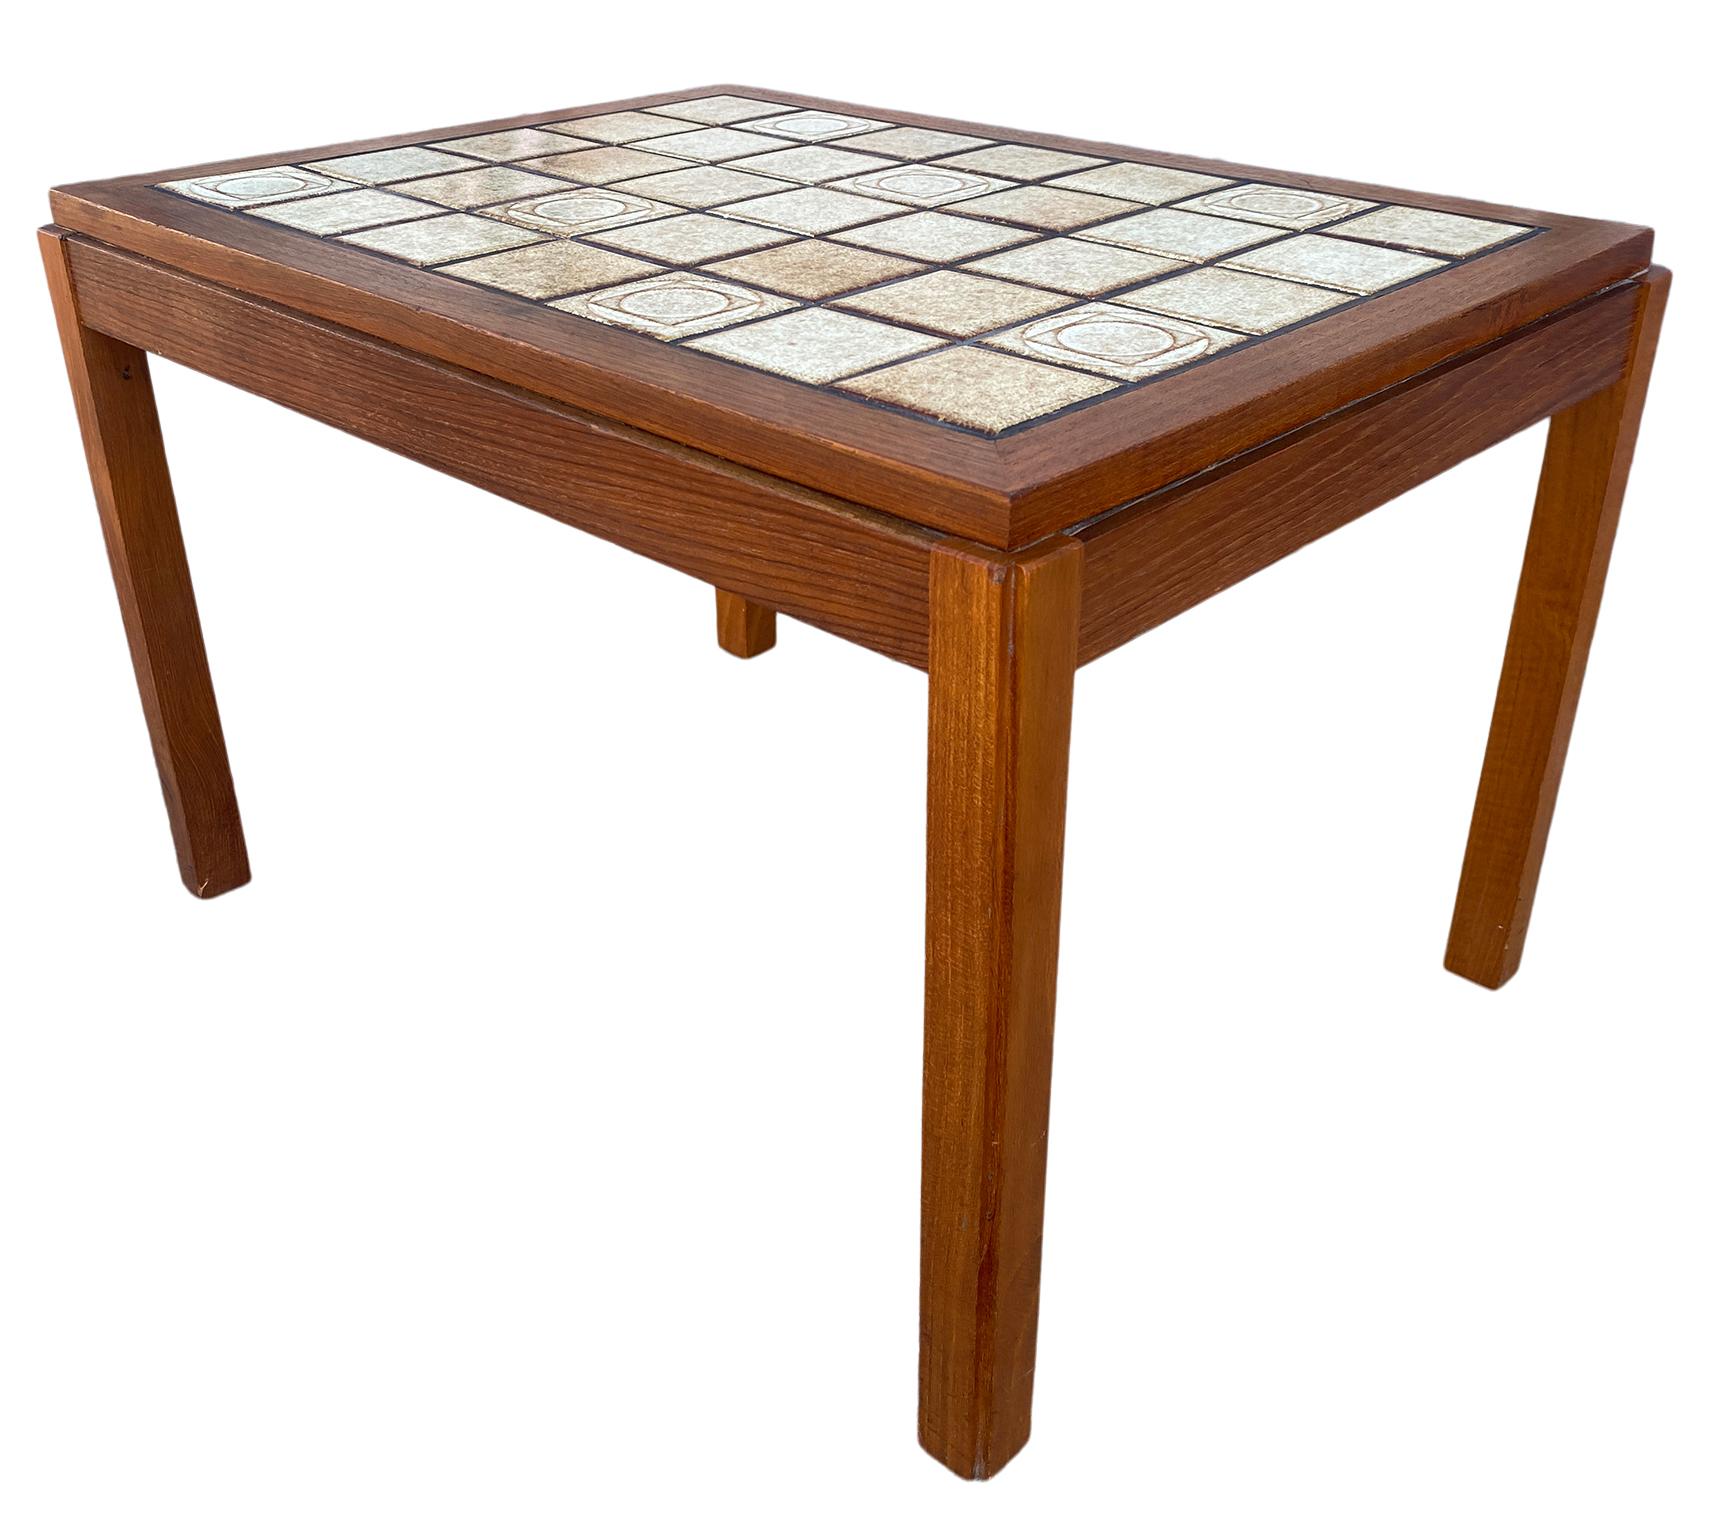 Mid-20th Century Midcentury Danish Modern Teak Ceramic Tile Coffee Table Bench For Sale